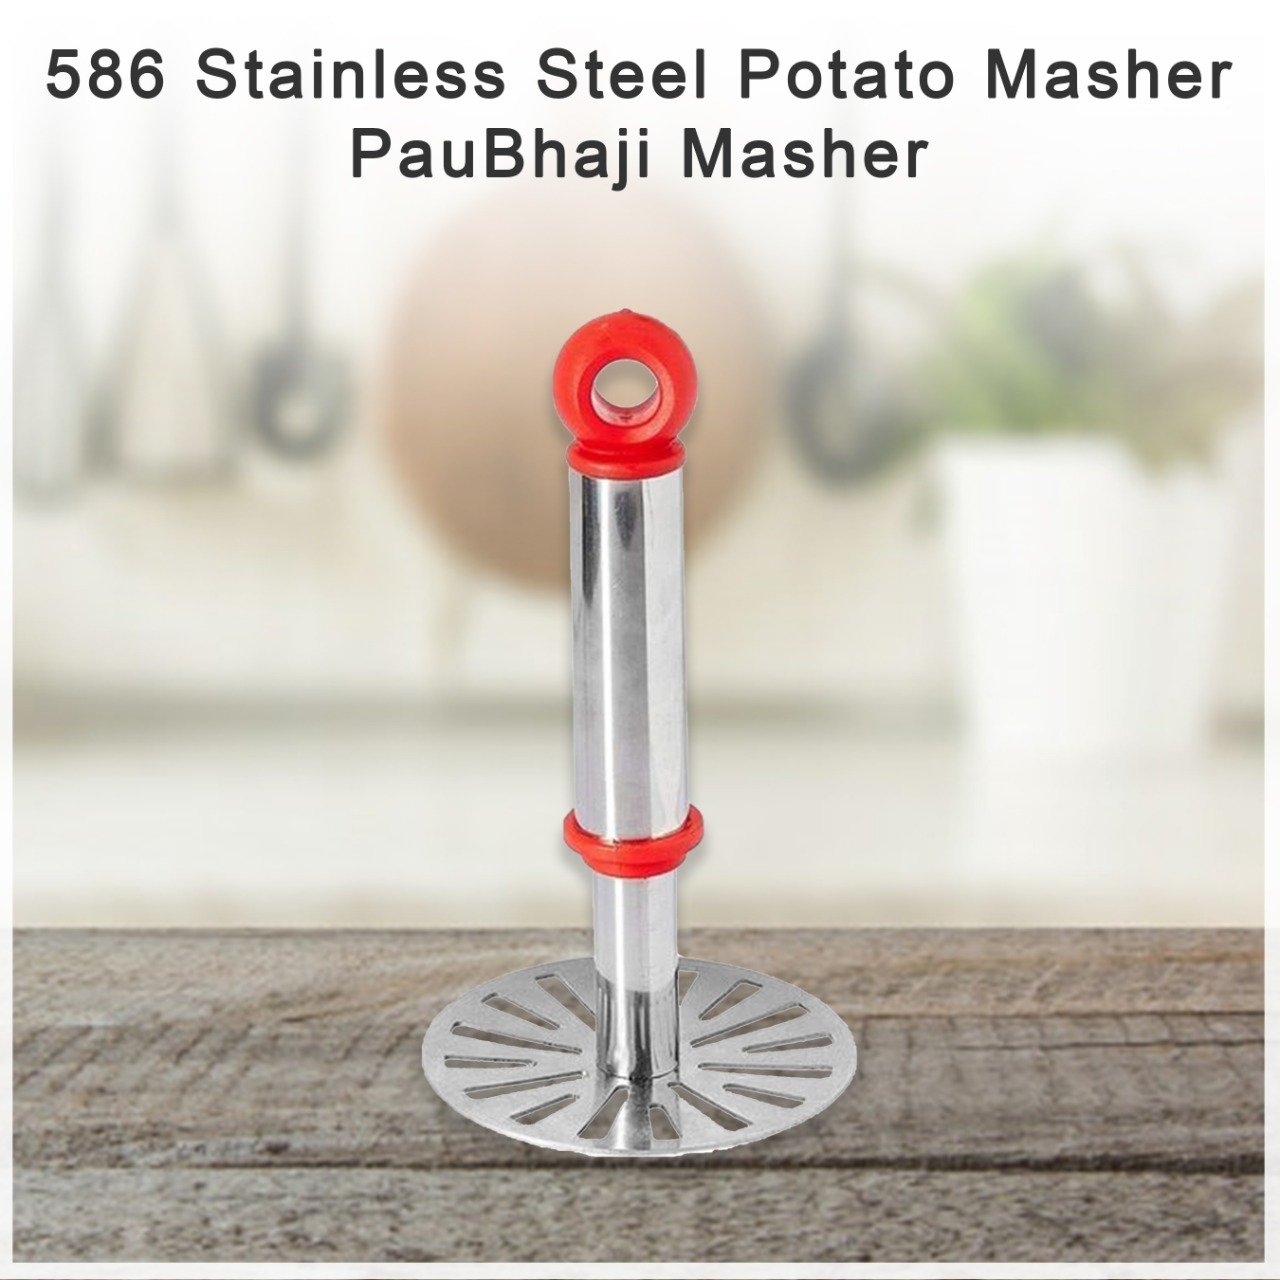 0586 Stainless Steel Potato Masher, PauBhaji Masher - SkyShopy